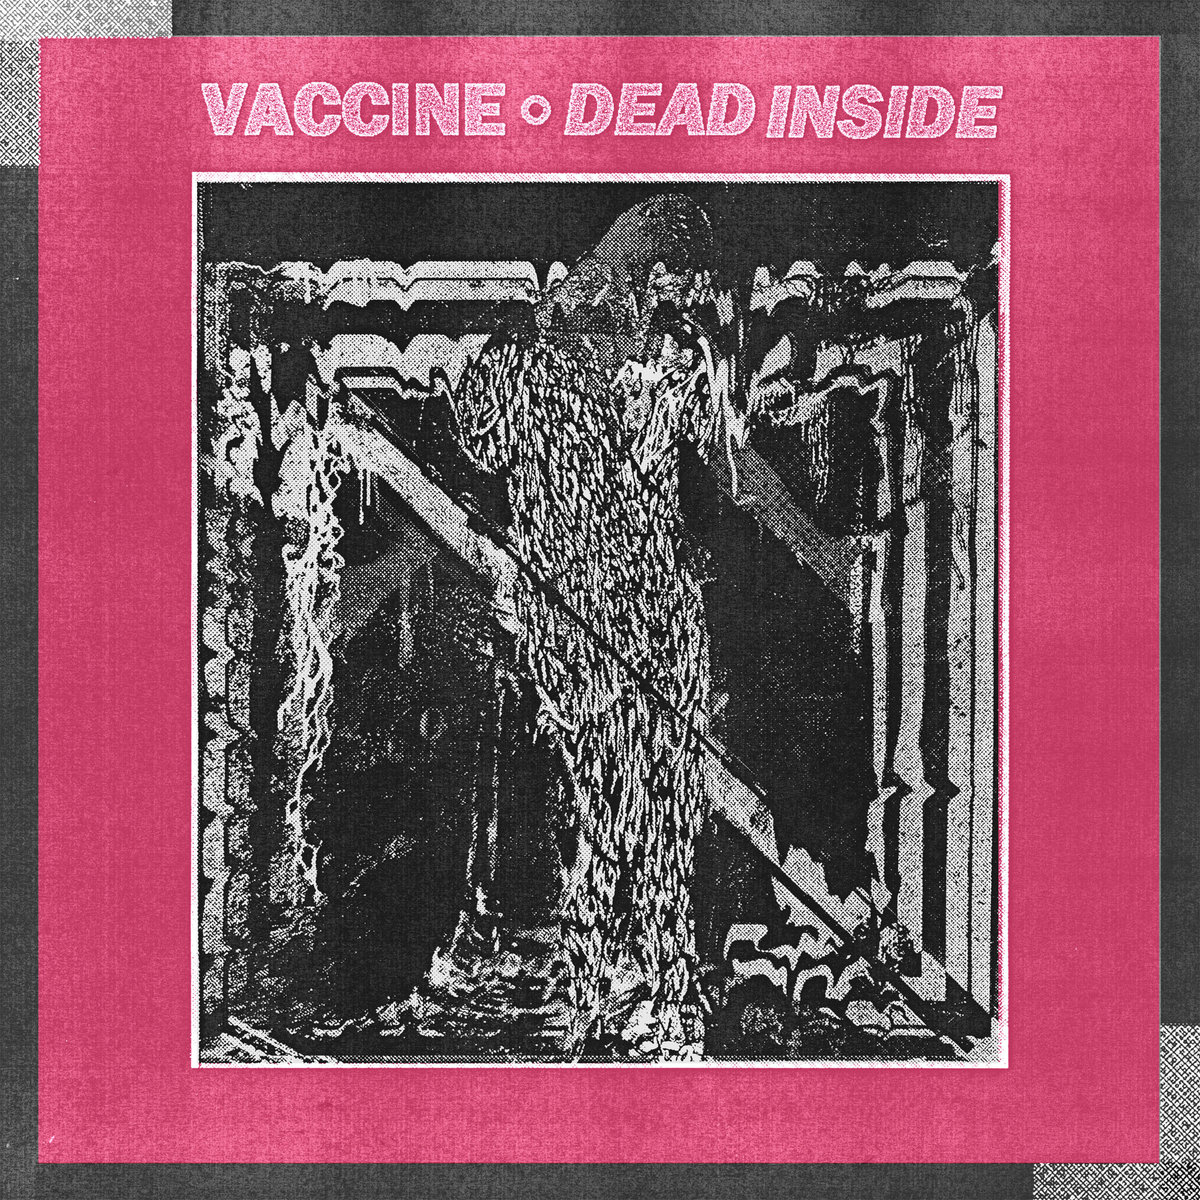 Vaccine - Dead Inside 7"